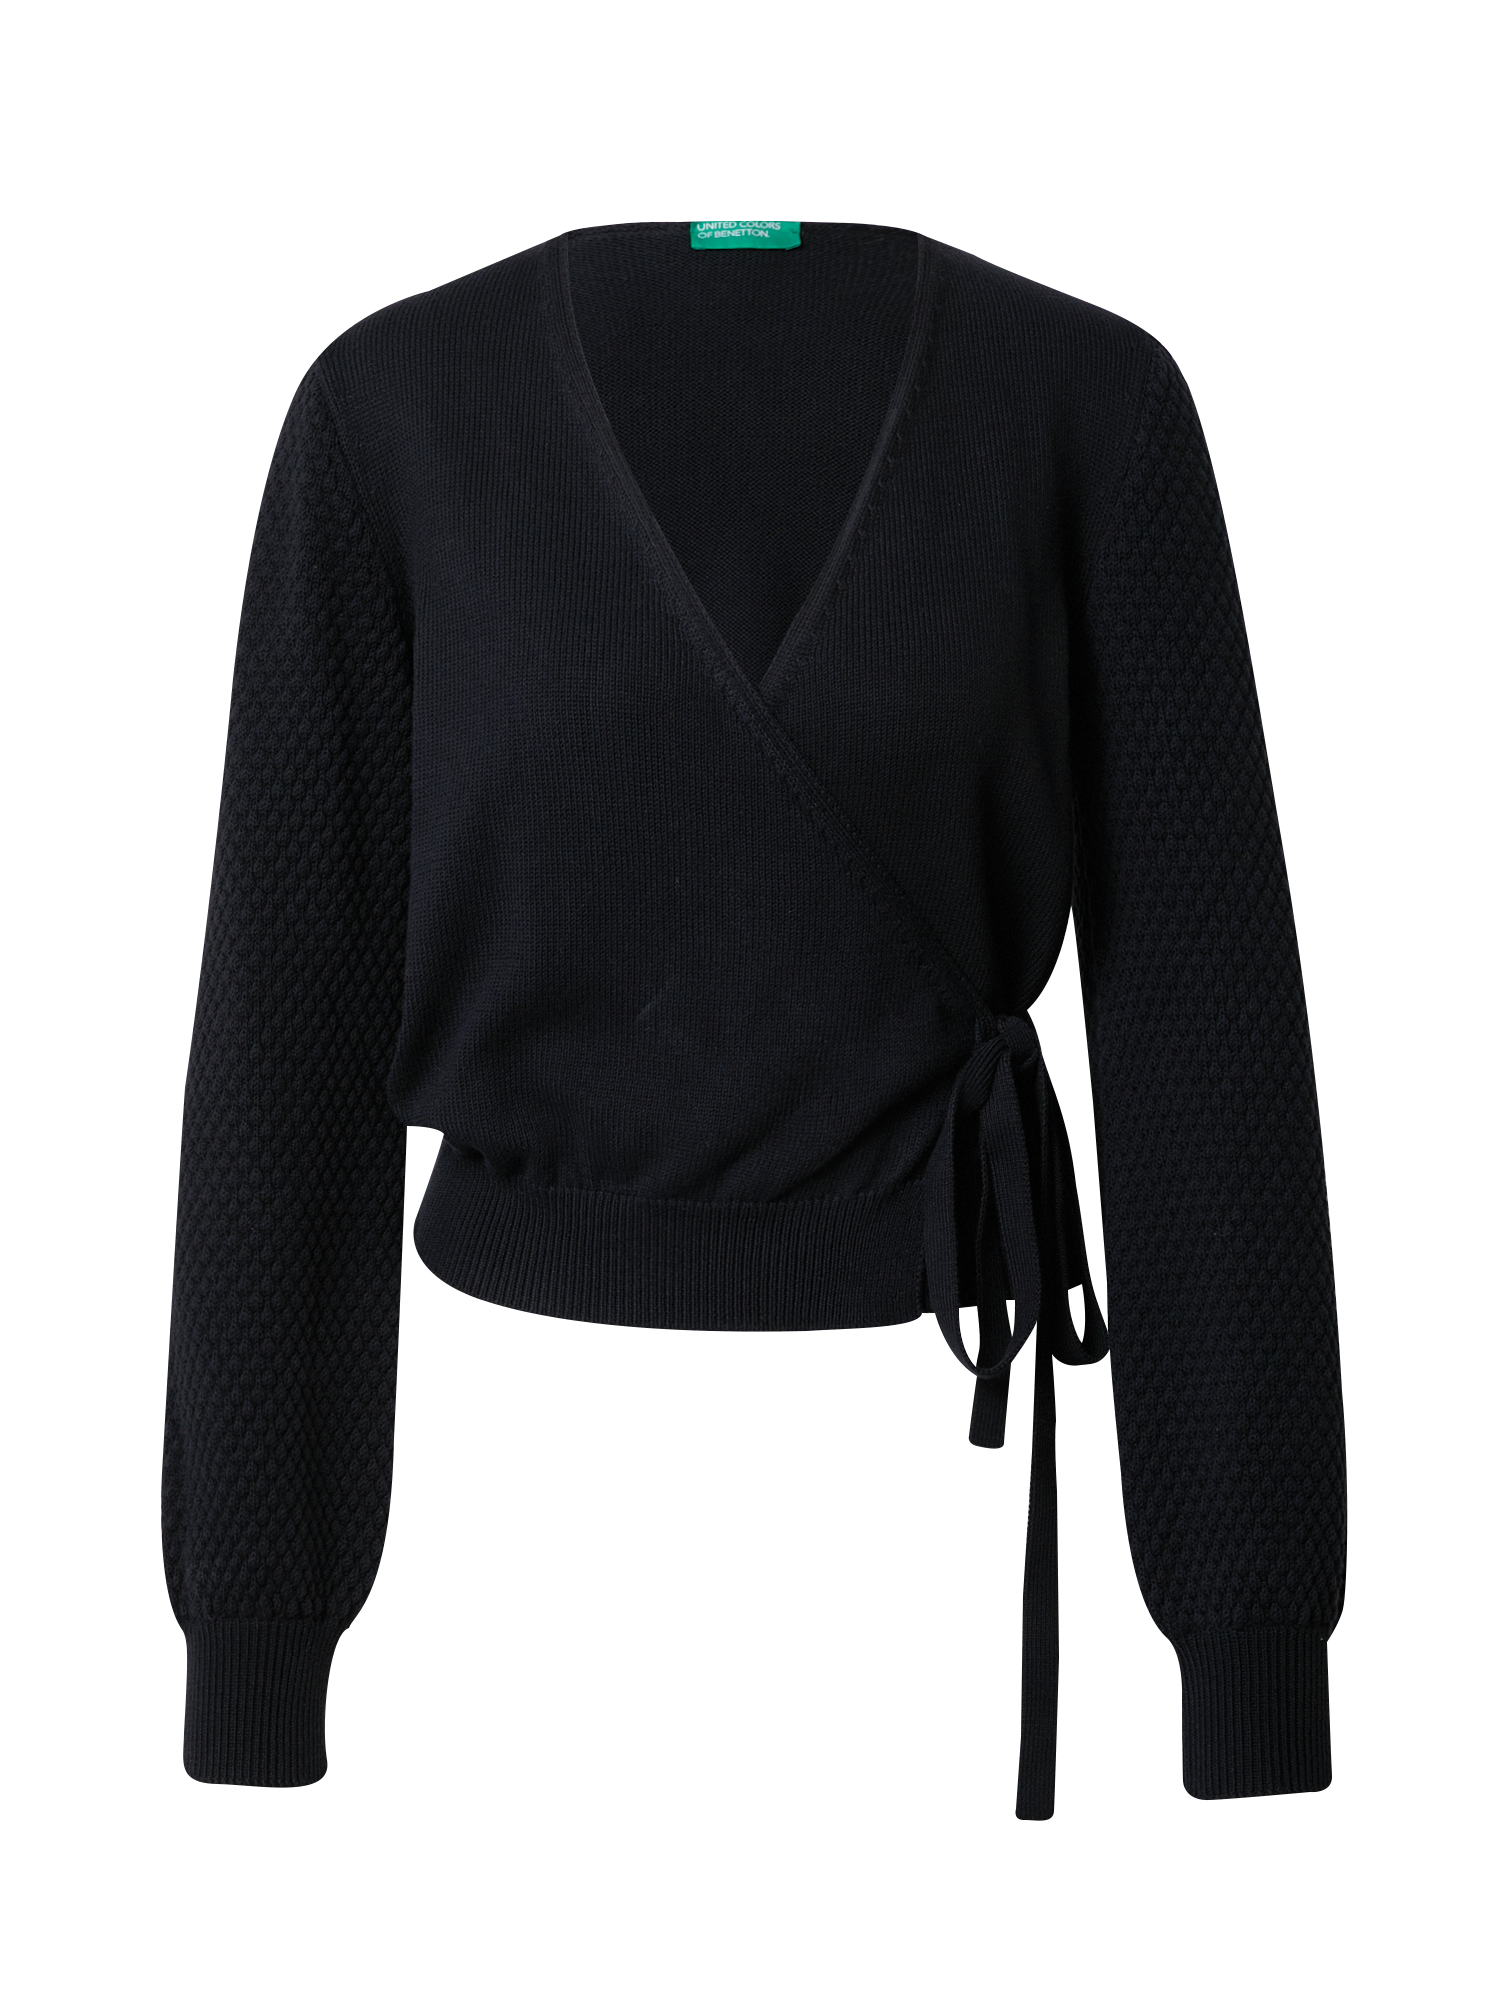 Swetry & dzianina VJRmt UNITED COLORS OF BENETTON Sweter w kolorze Czarnym 